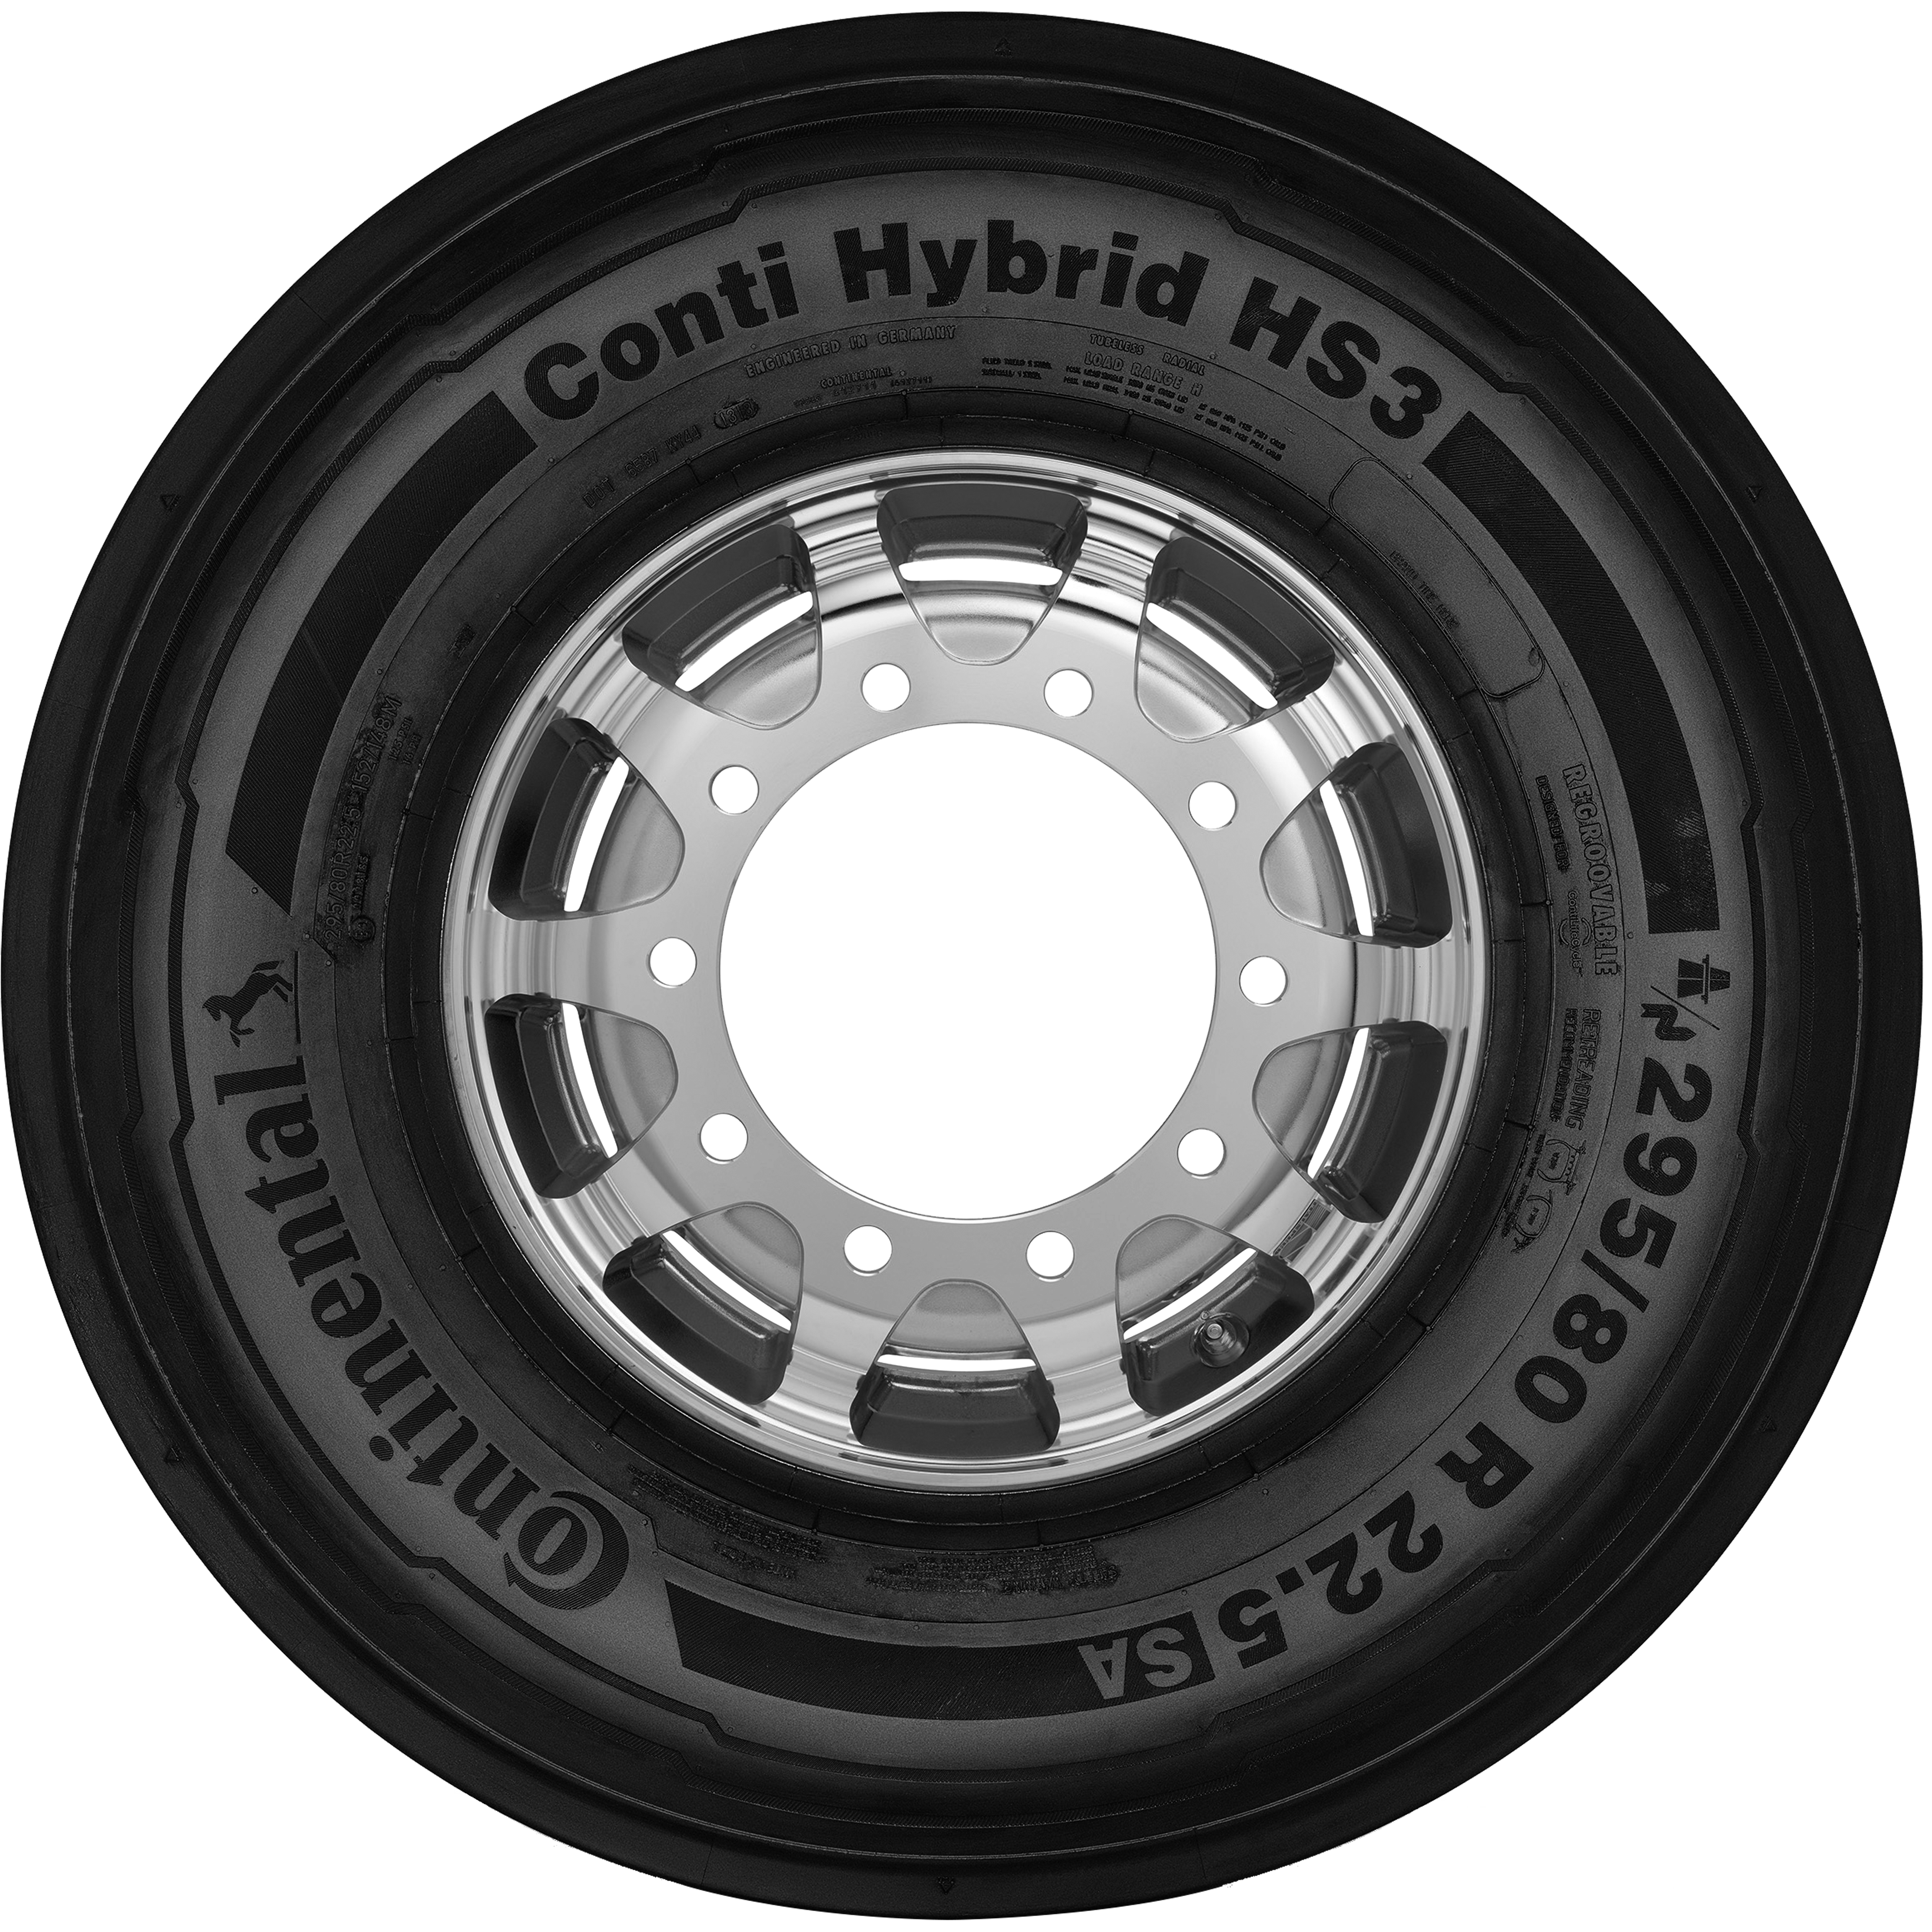 (foto do pneu Conti Hybrid 295/80 R22.5)